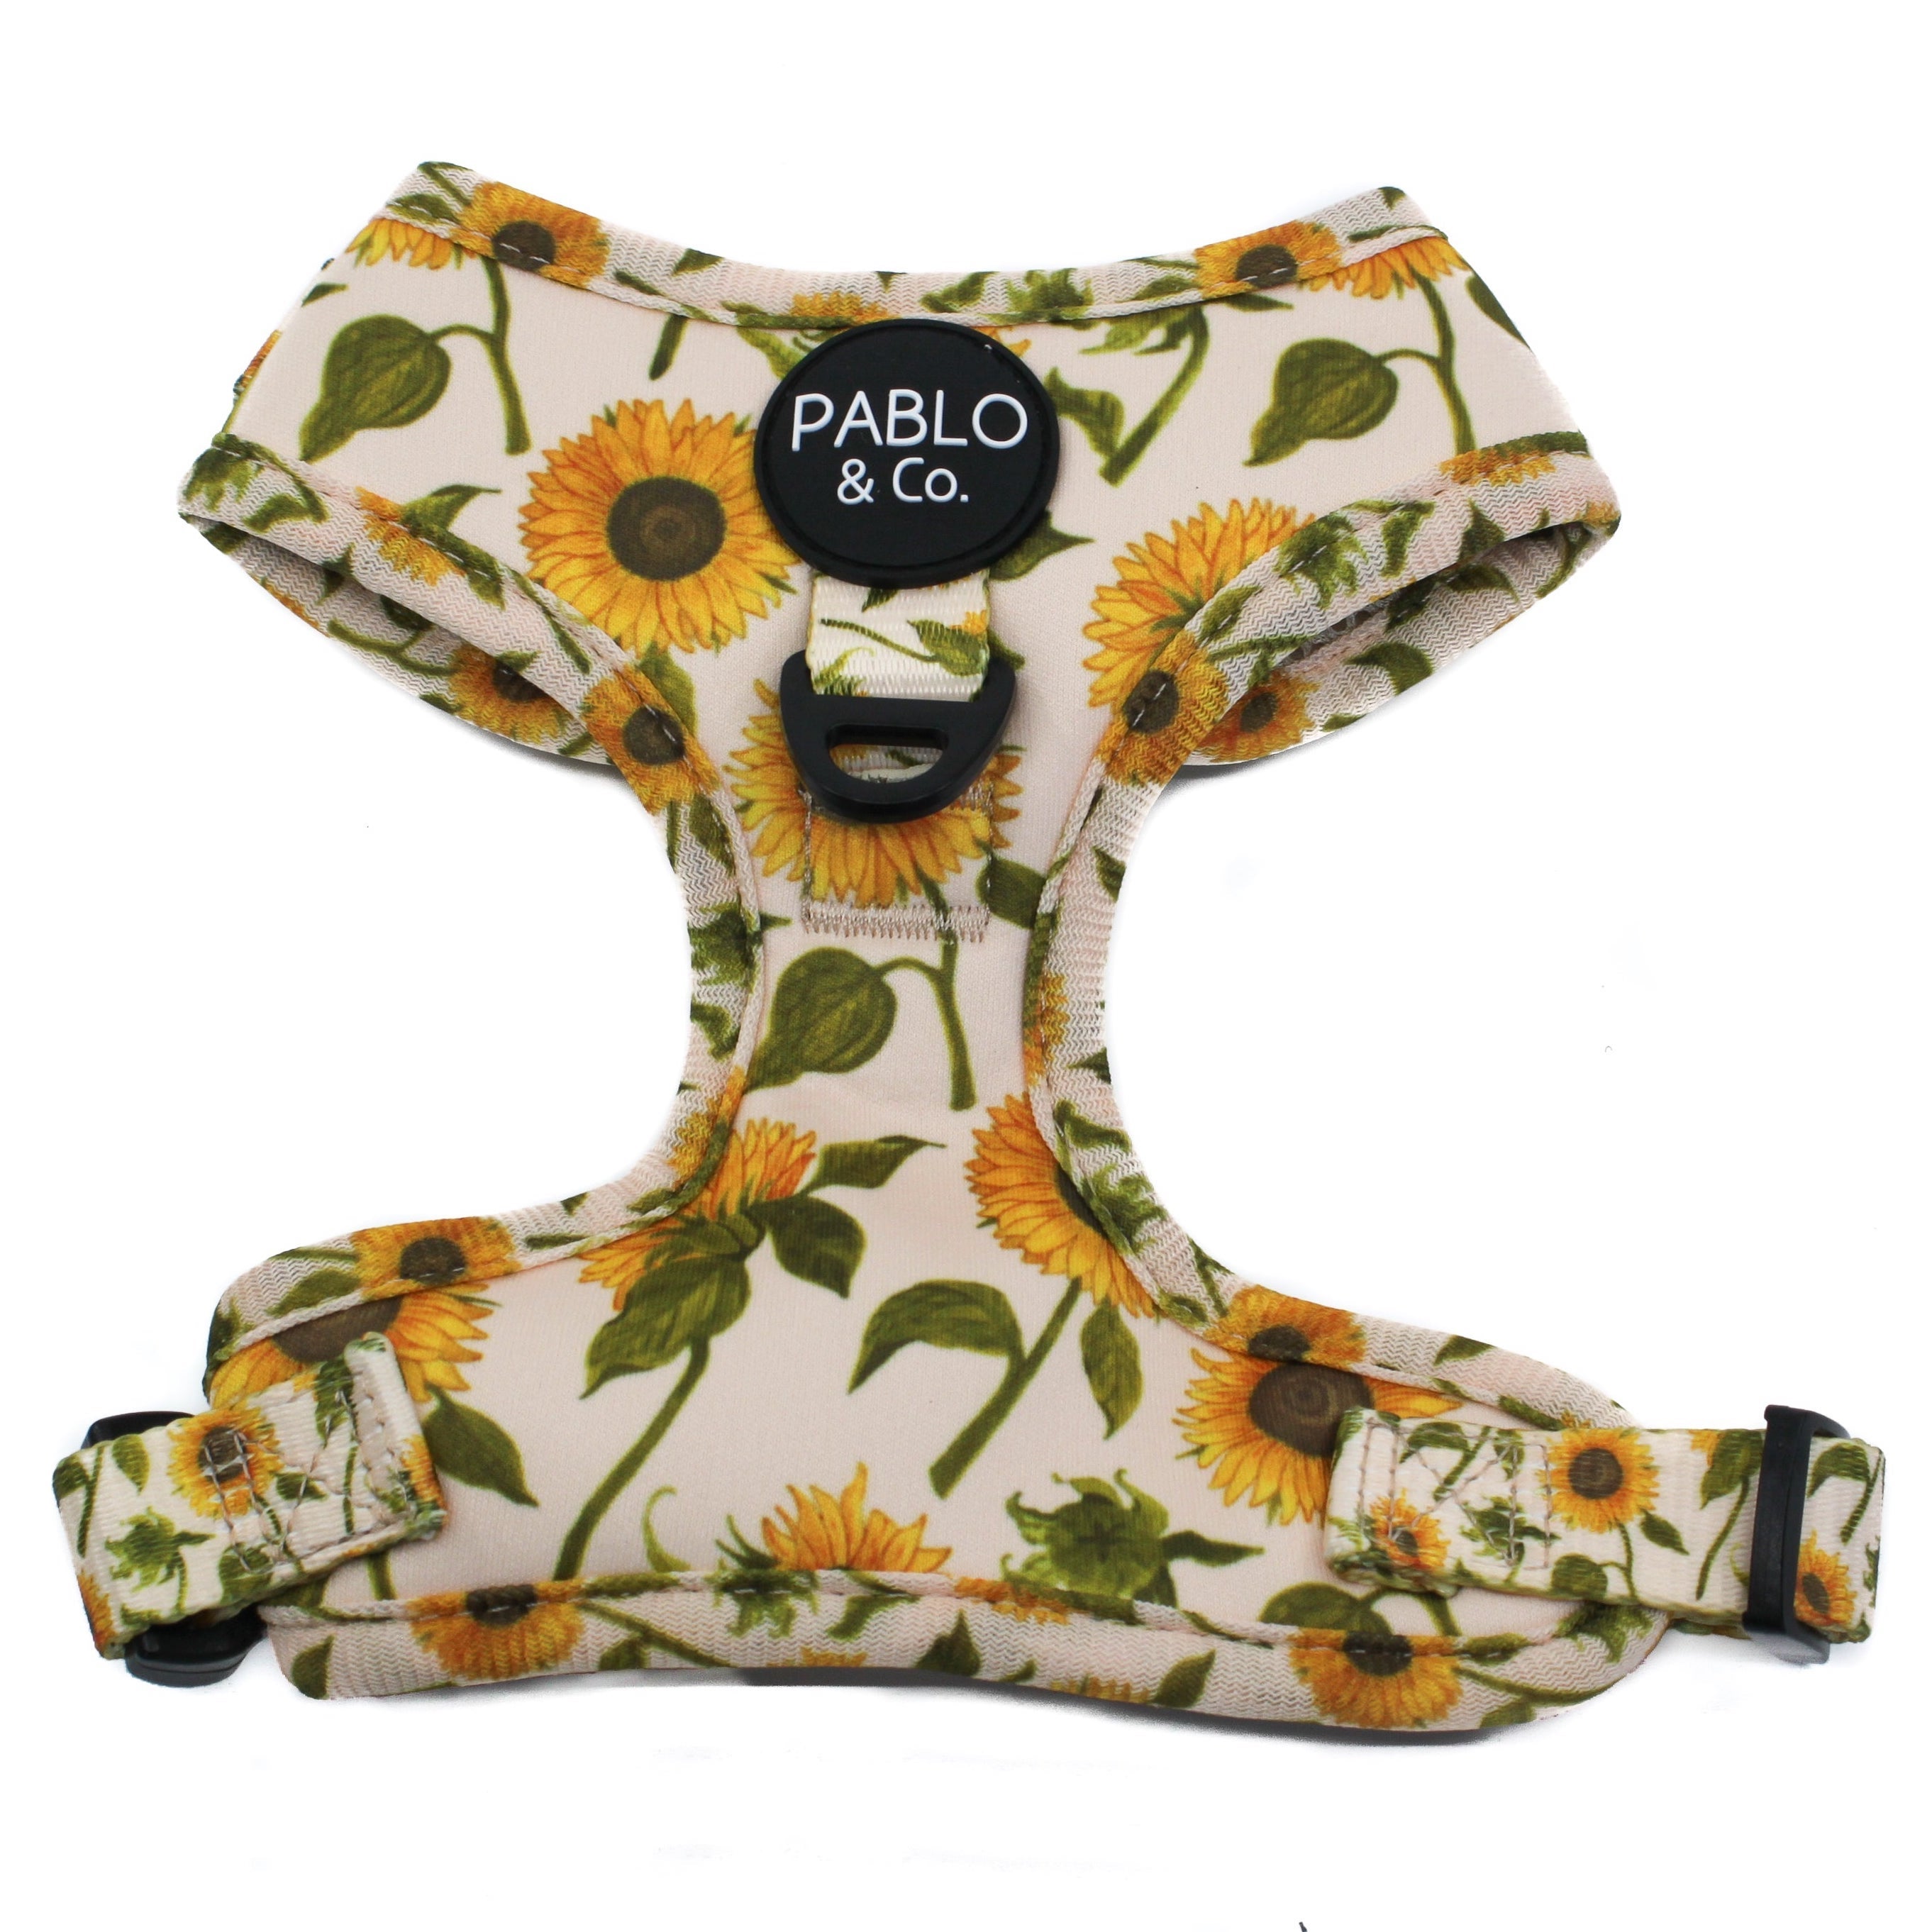 PABLO & CO - Sunflowers Adjustable Dog Harness